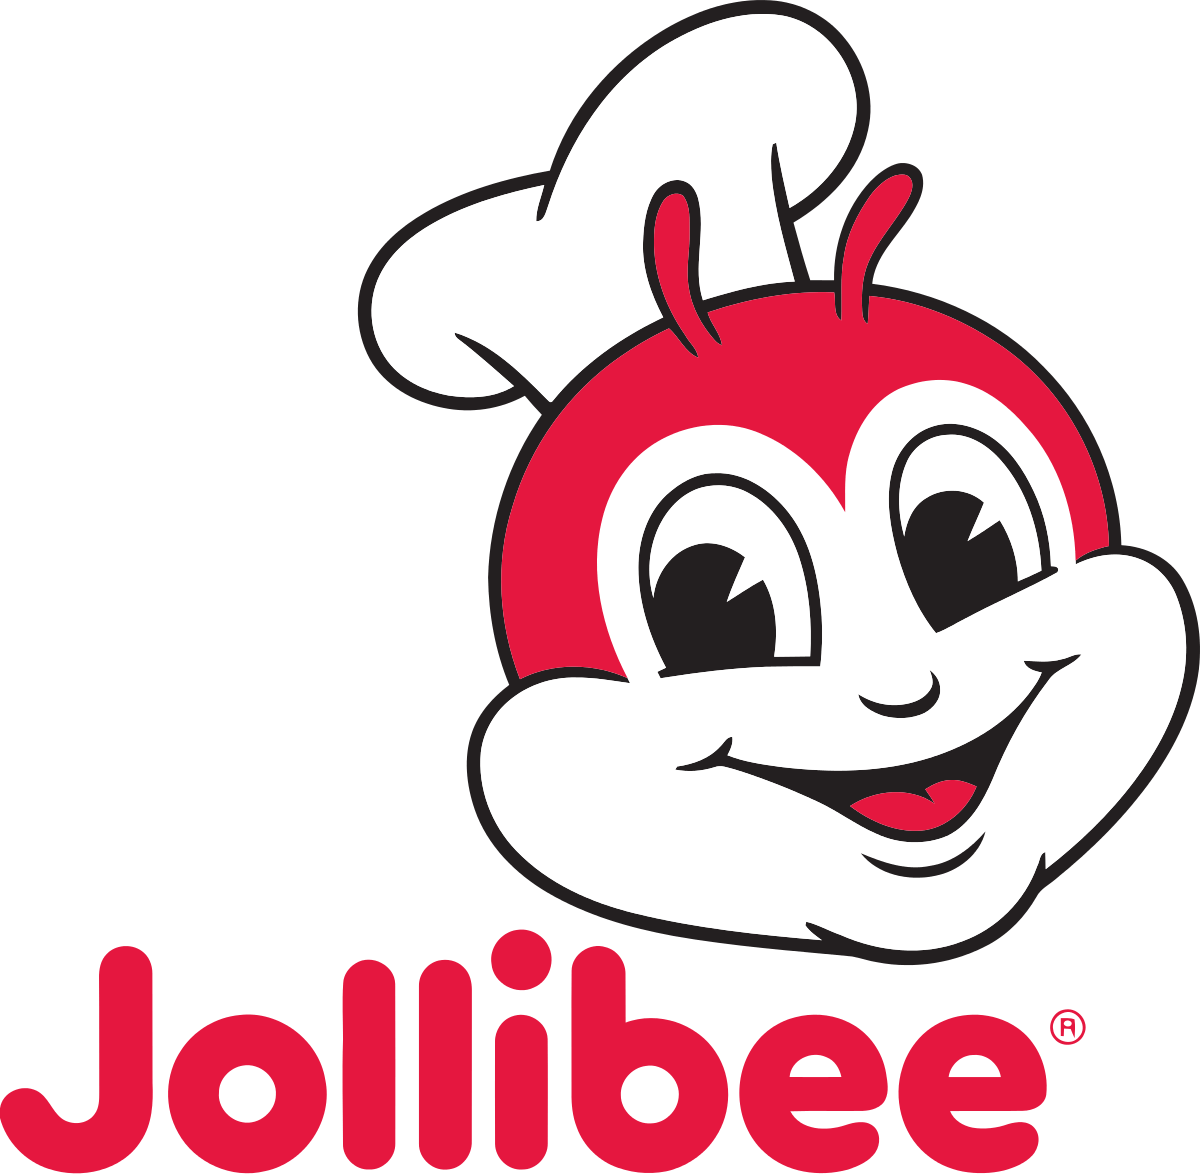 Red Face Statue Logo - Jollibee